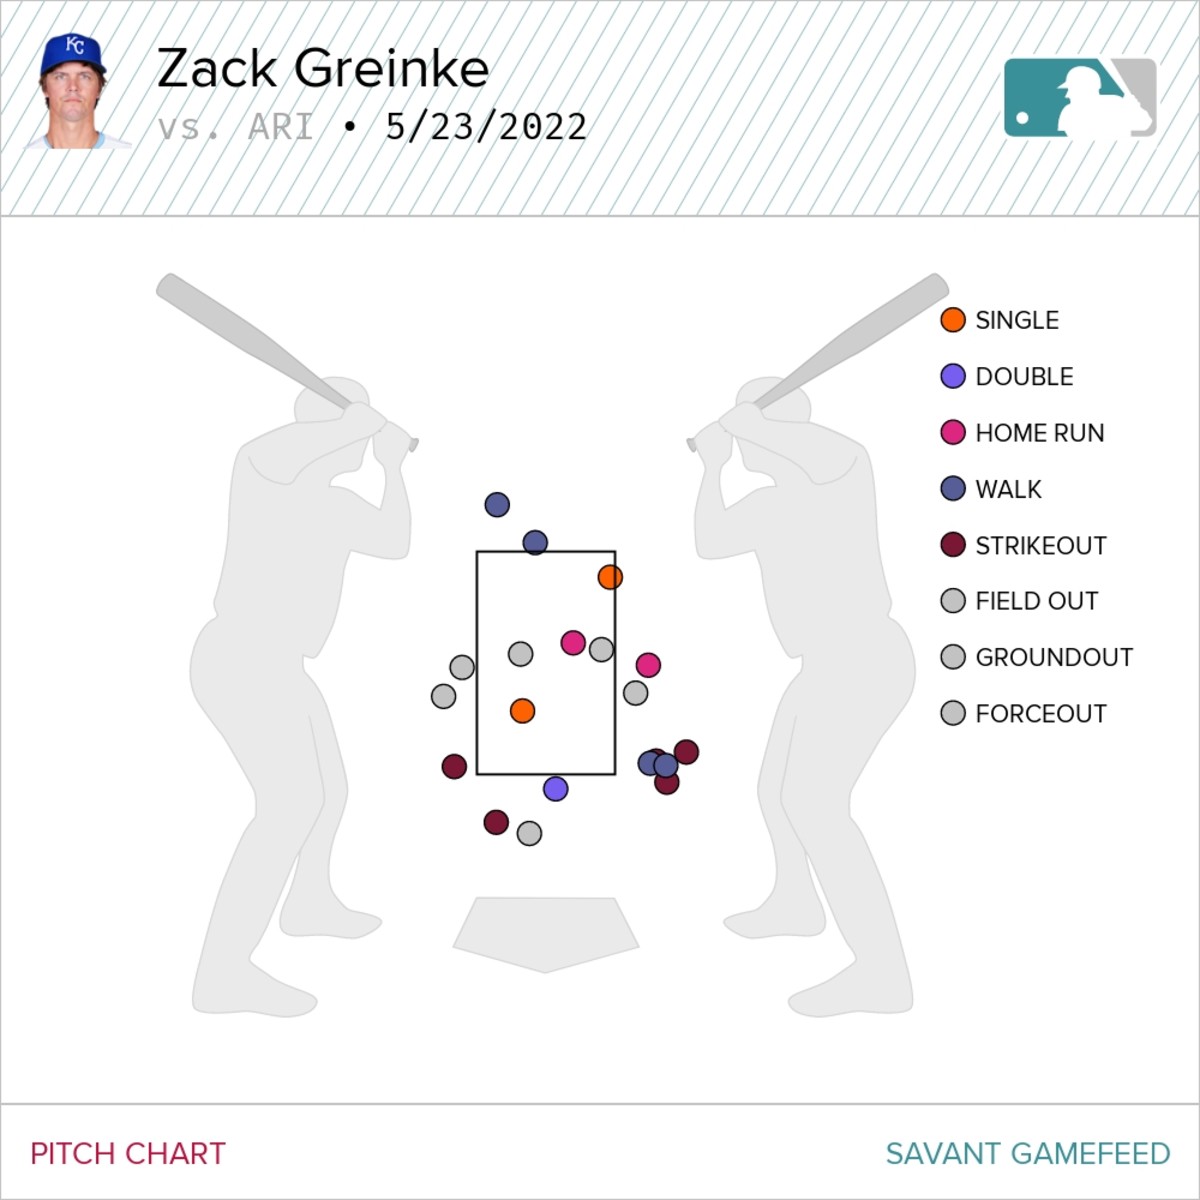 Zack Greinke pitch chart, courtesy of Baseball Savant. 